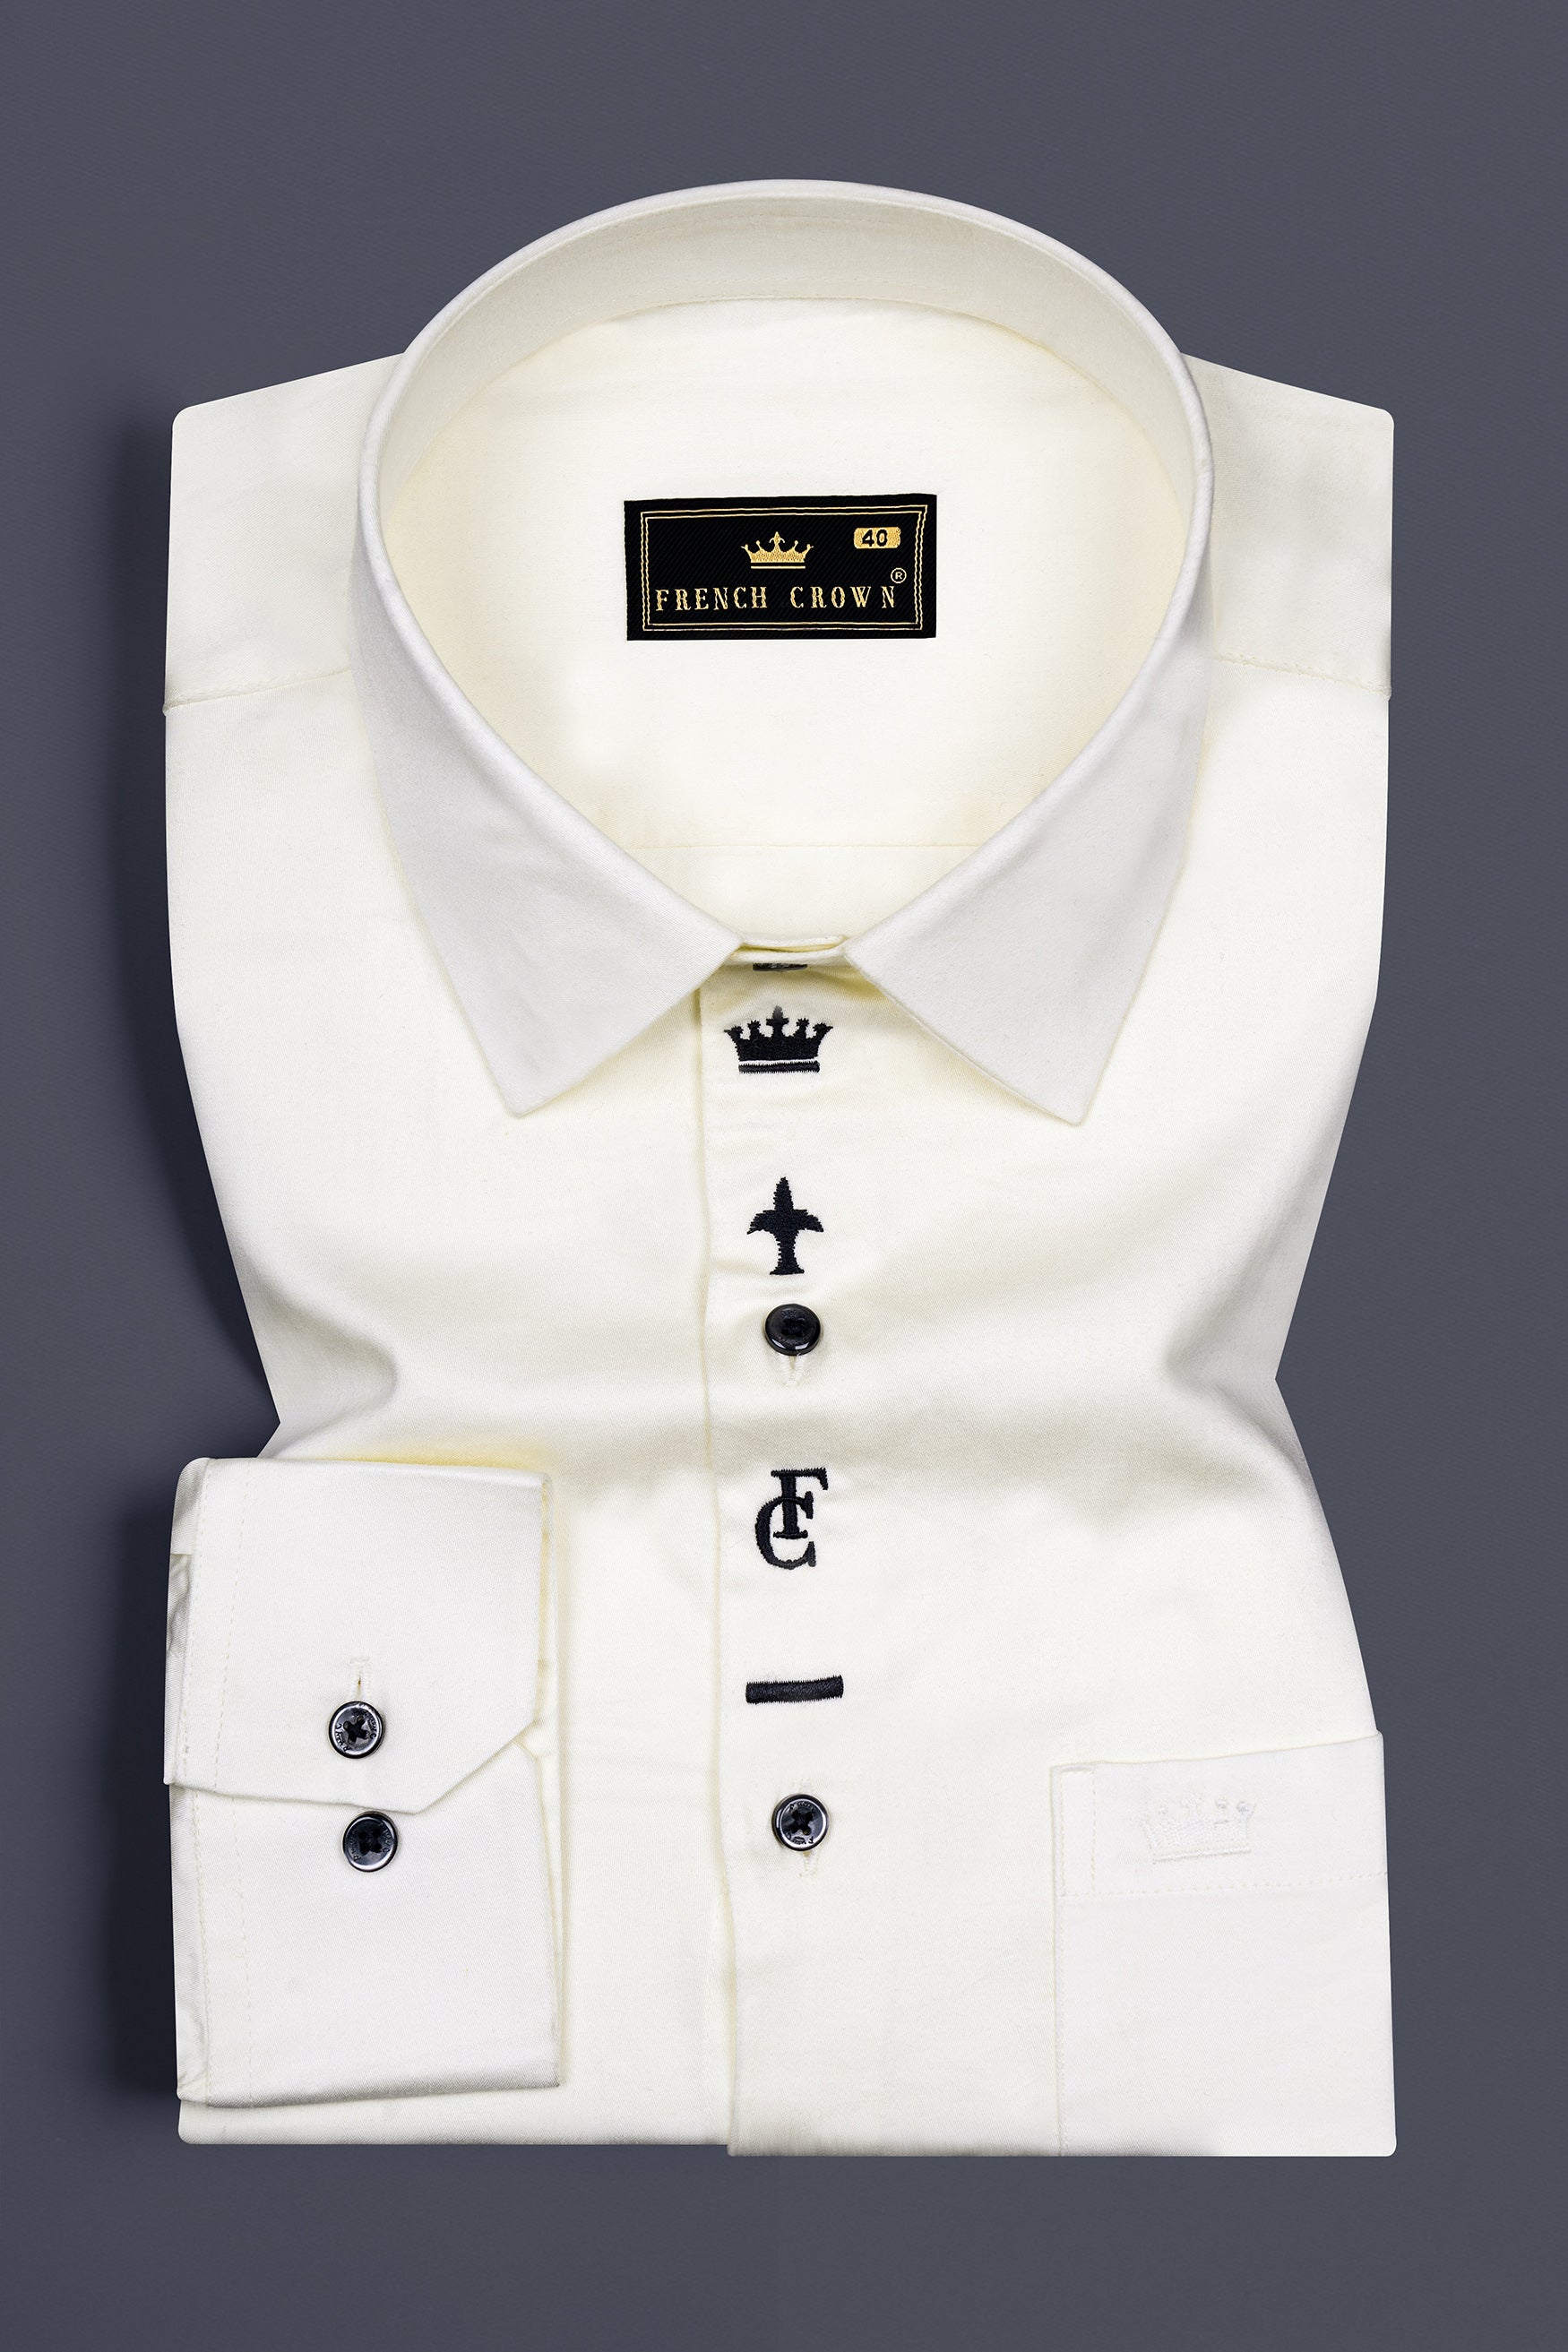 Amour Cream French Crown Elements Embroidered Subtle Sheen Super Soft Premium Cotton Designer Shirt